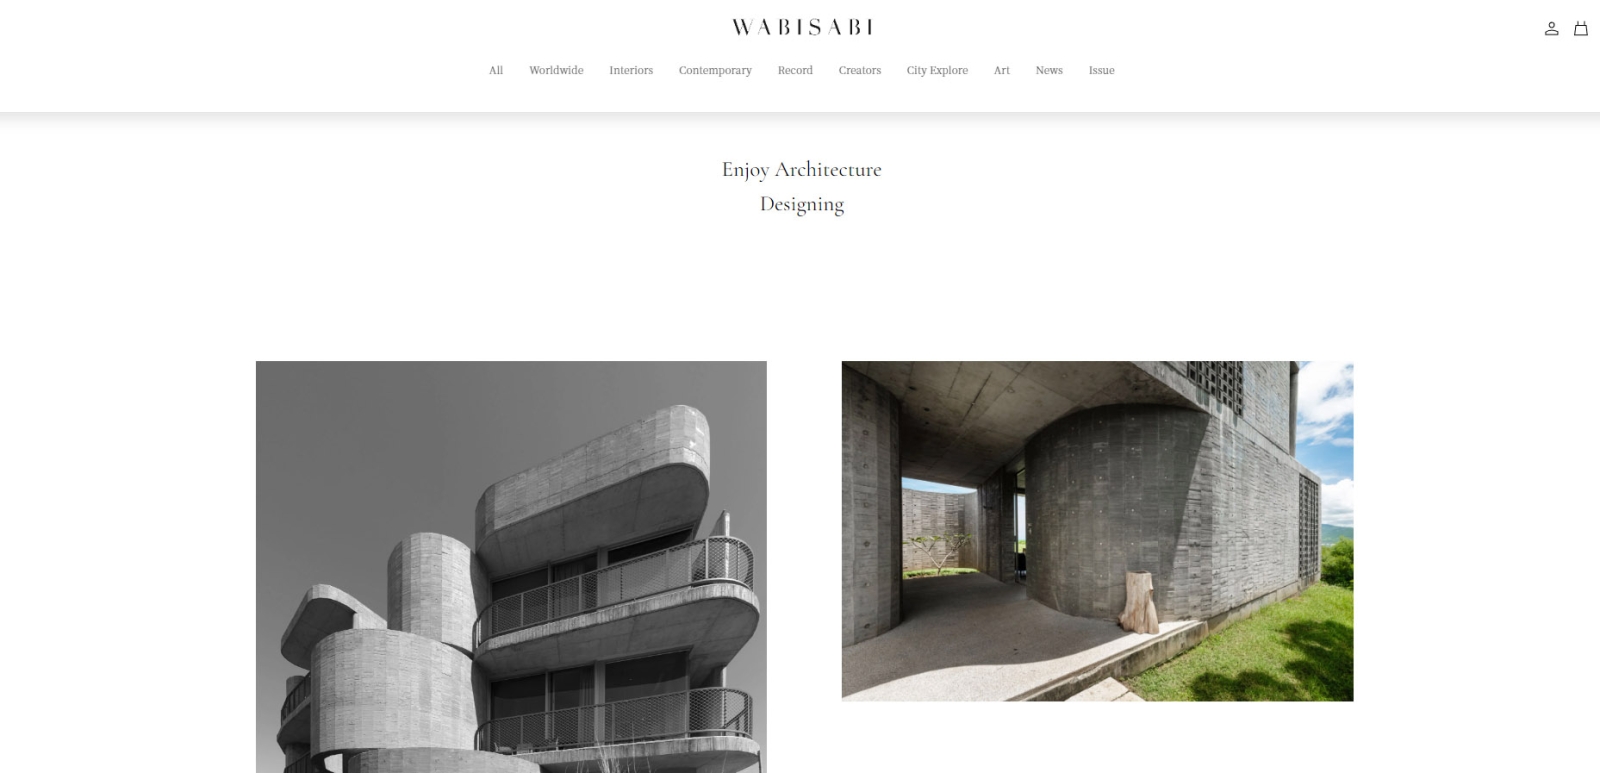 WABISABI magazine reported the Wandering Walls